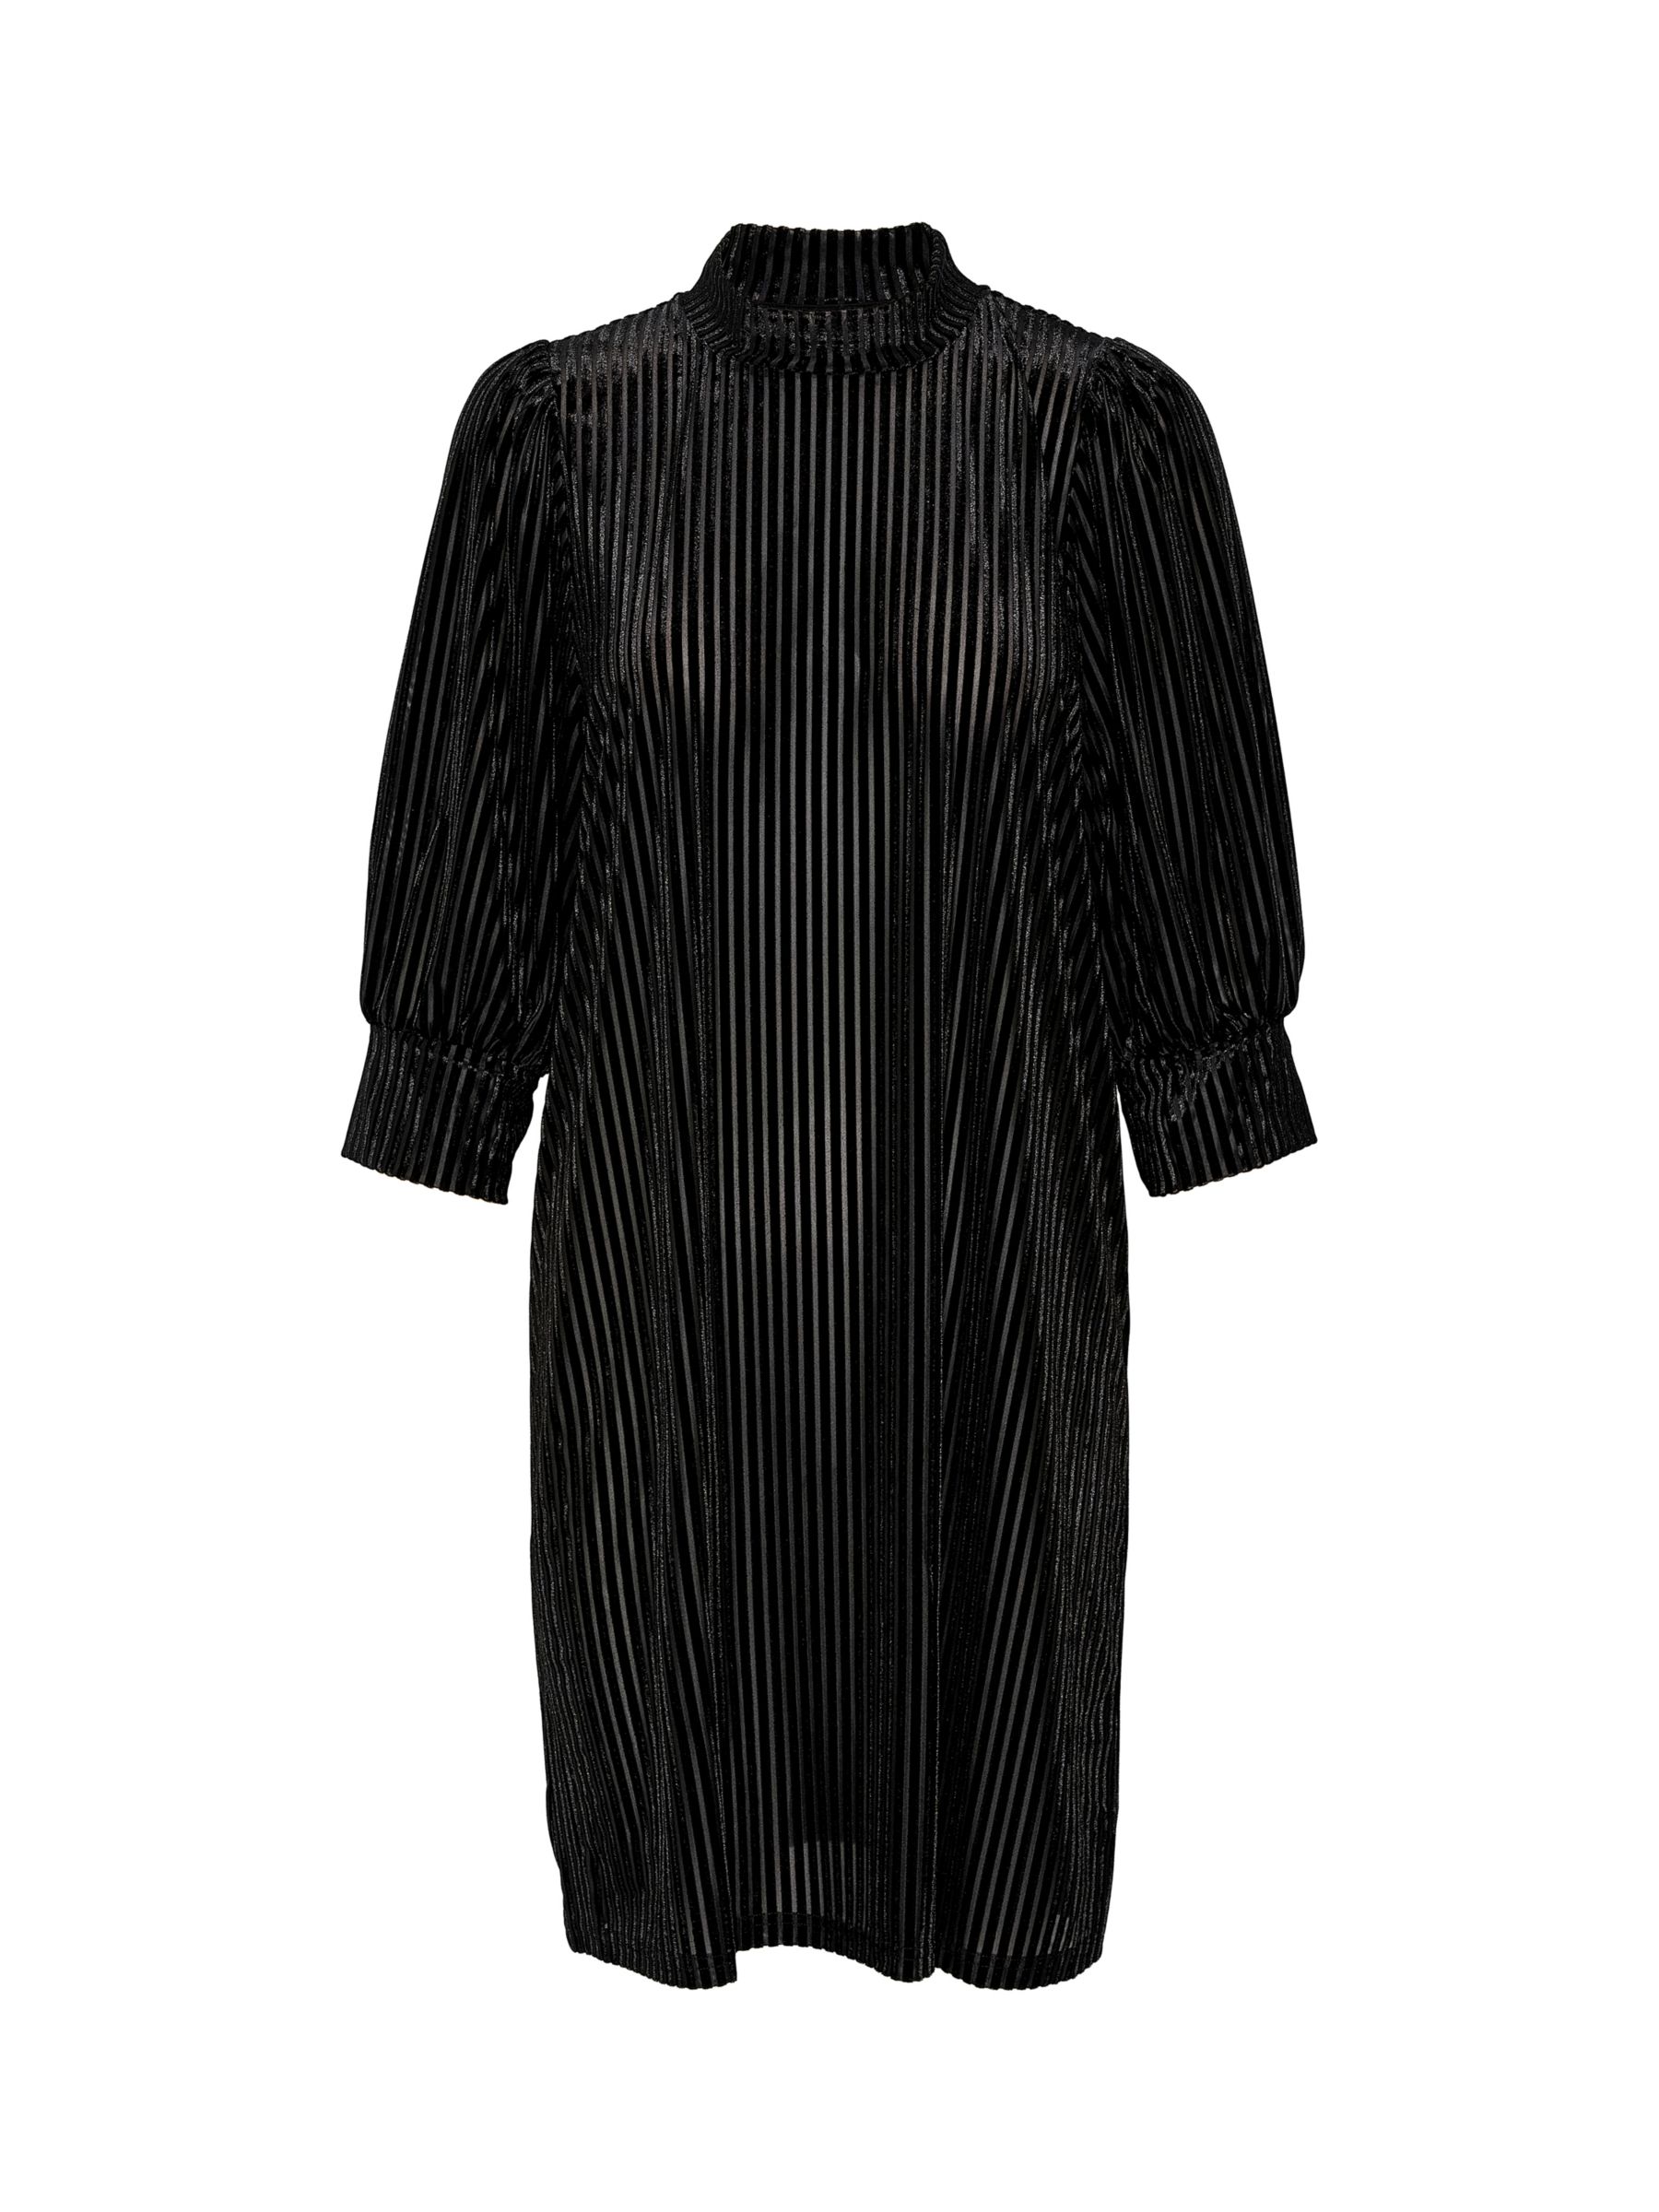 KAFFE Caca High Neck Half Sleeve Dress, Black at John Lewis & Partners